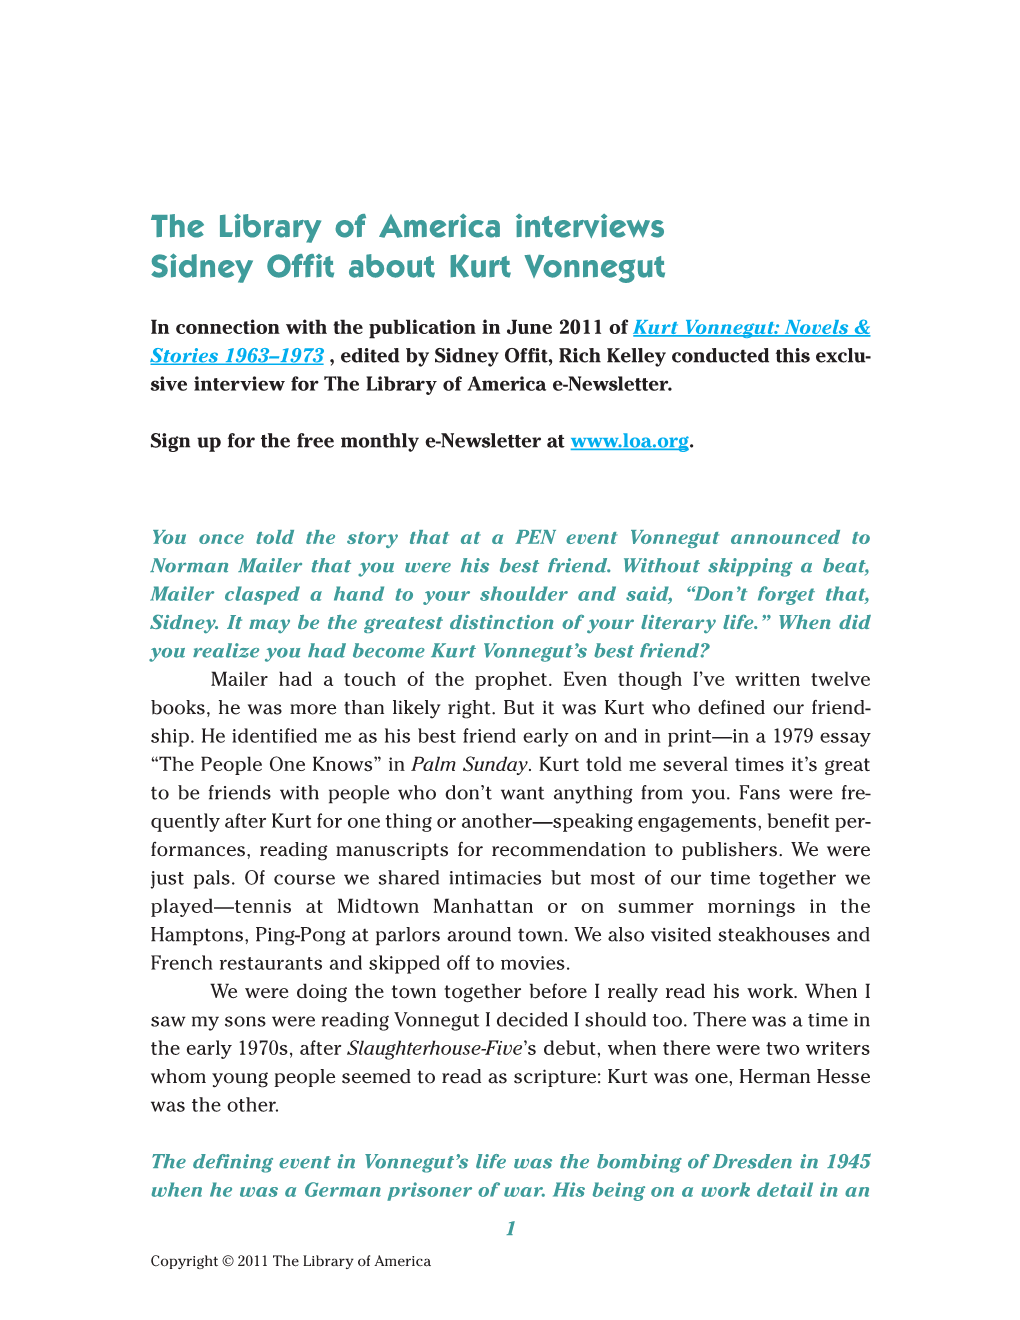 The Library of America Interviews Sidney Offit About Kurt Vonnegut